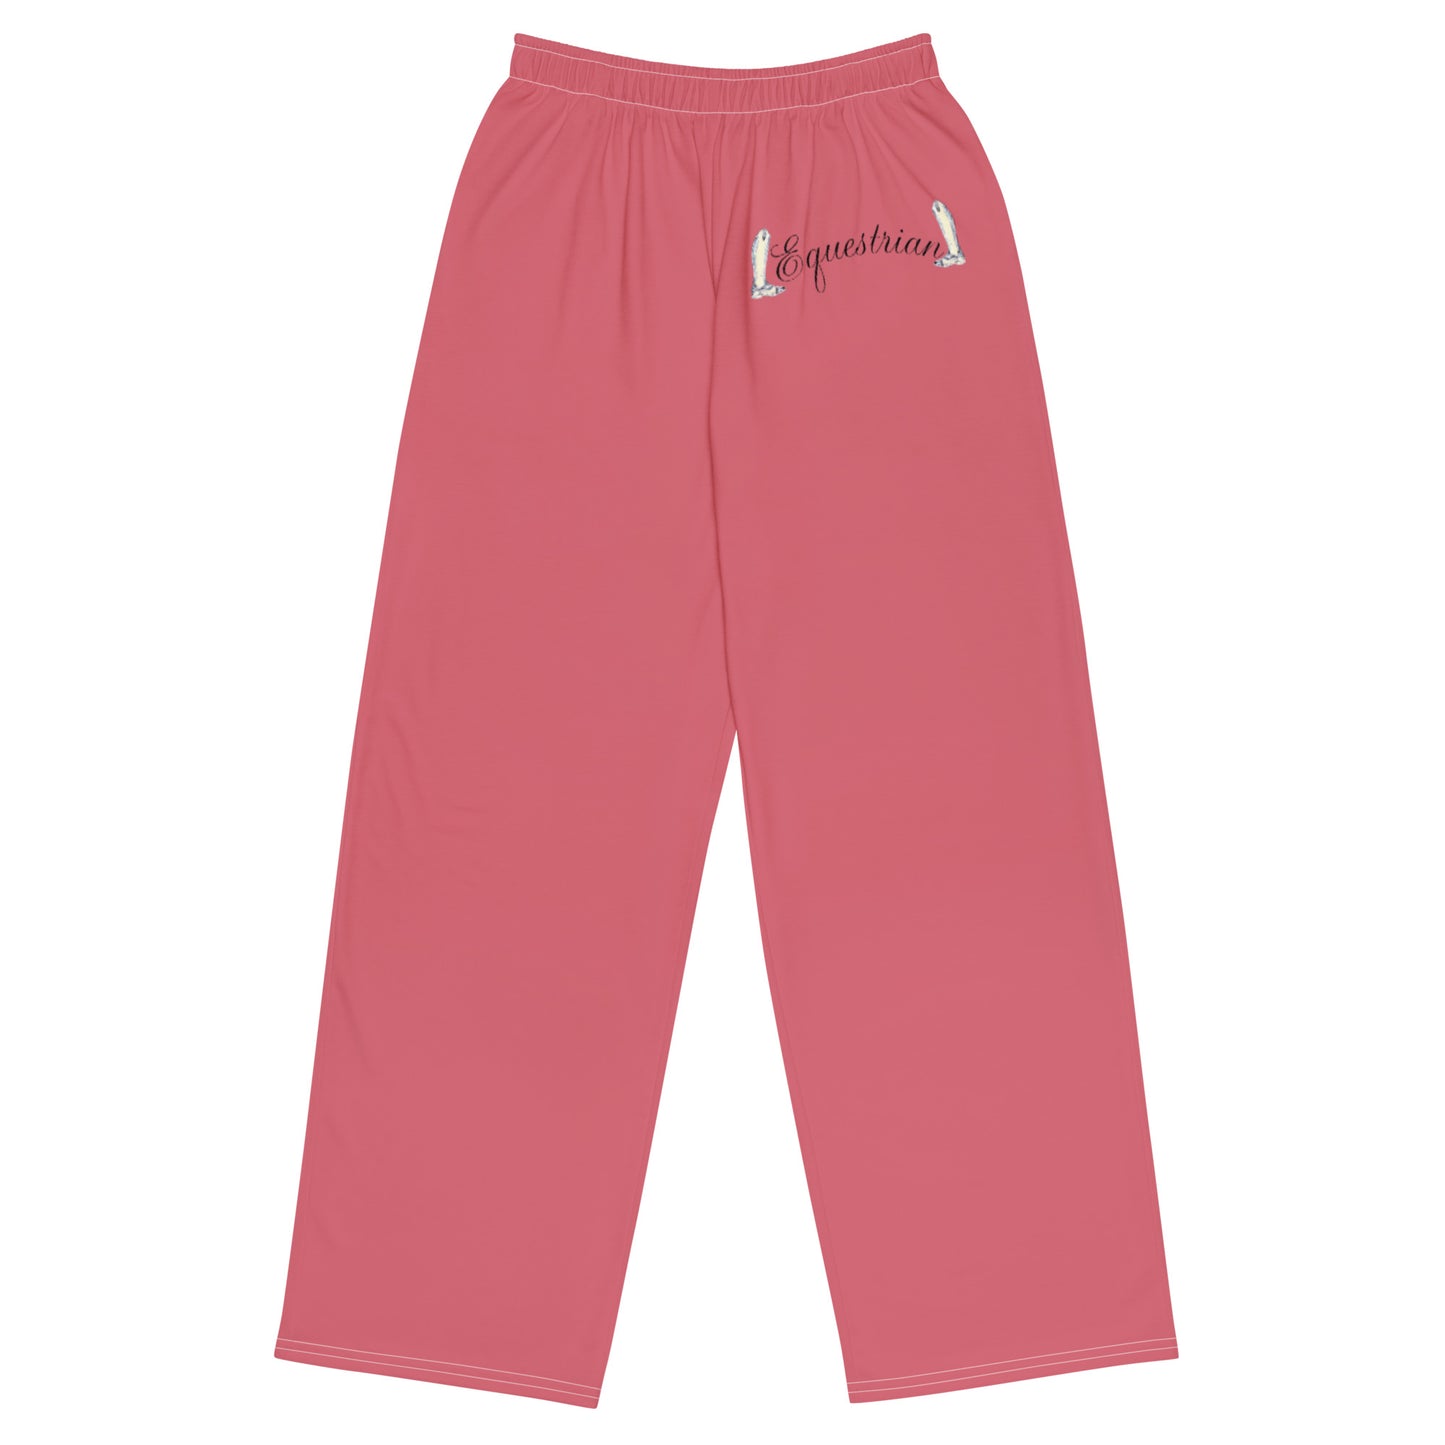 Y702 Wide-Leg Pants-Equestrian-English Attire-Rose Pink